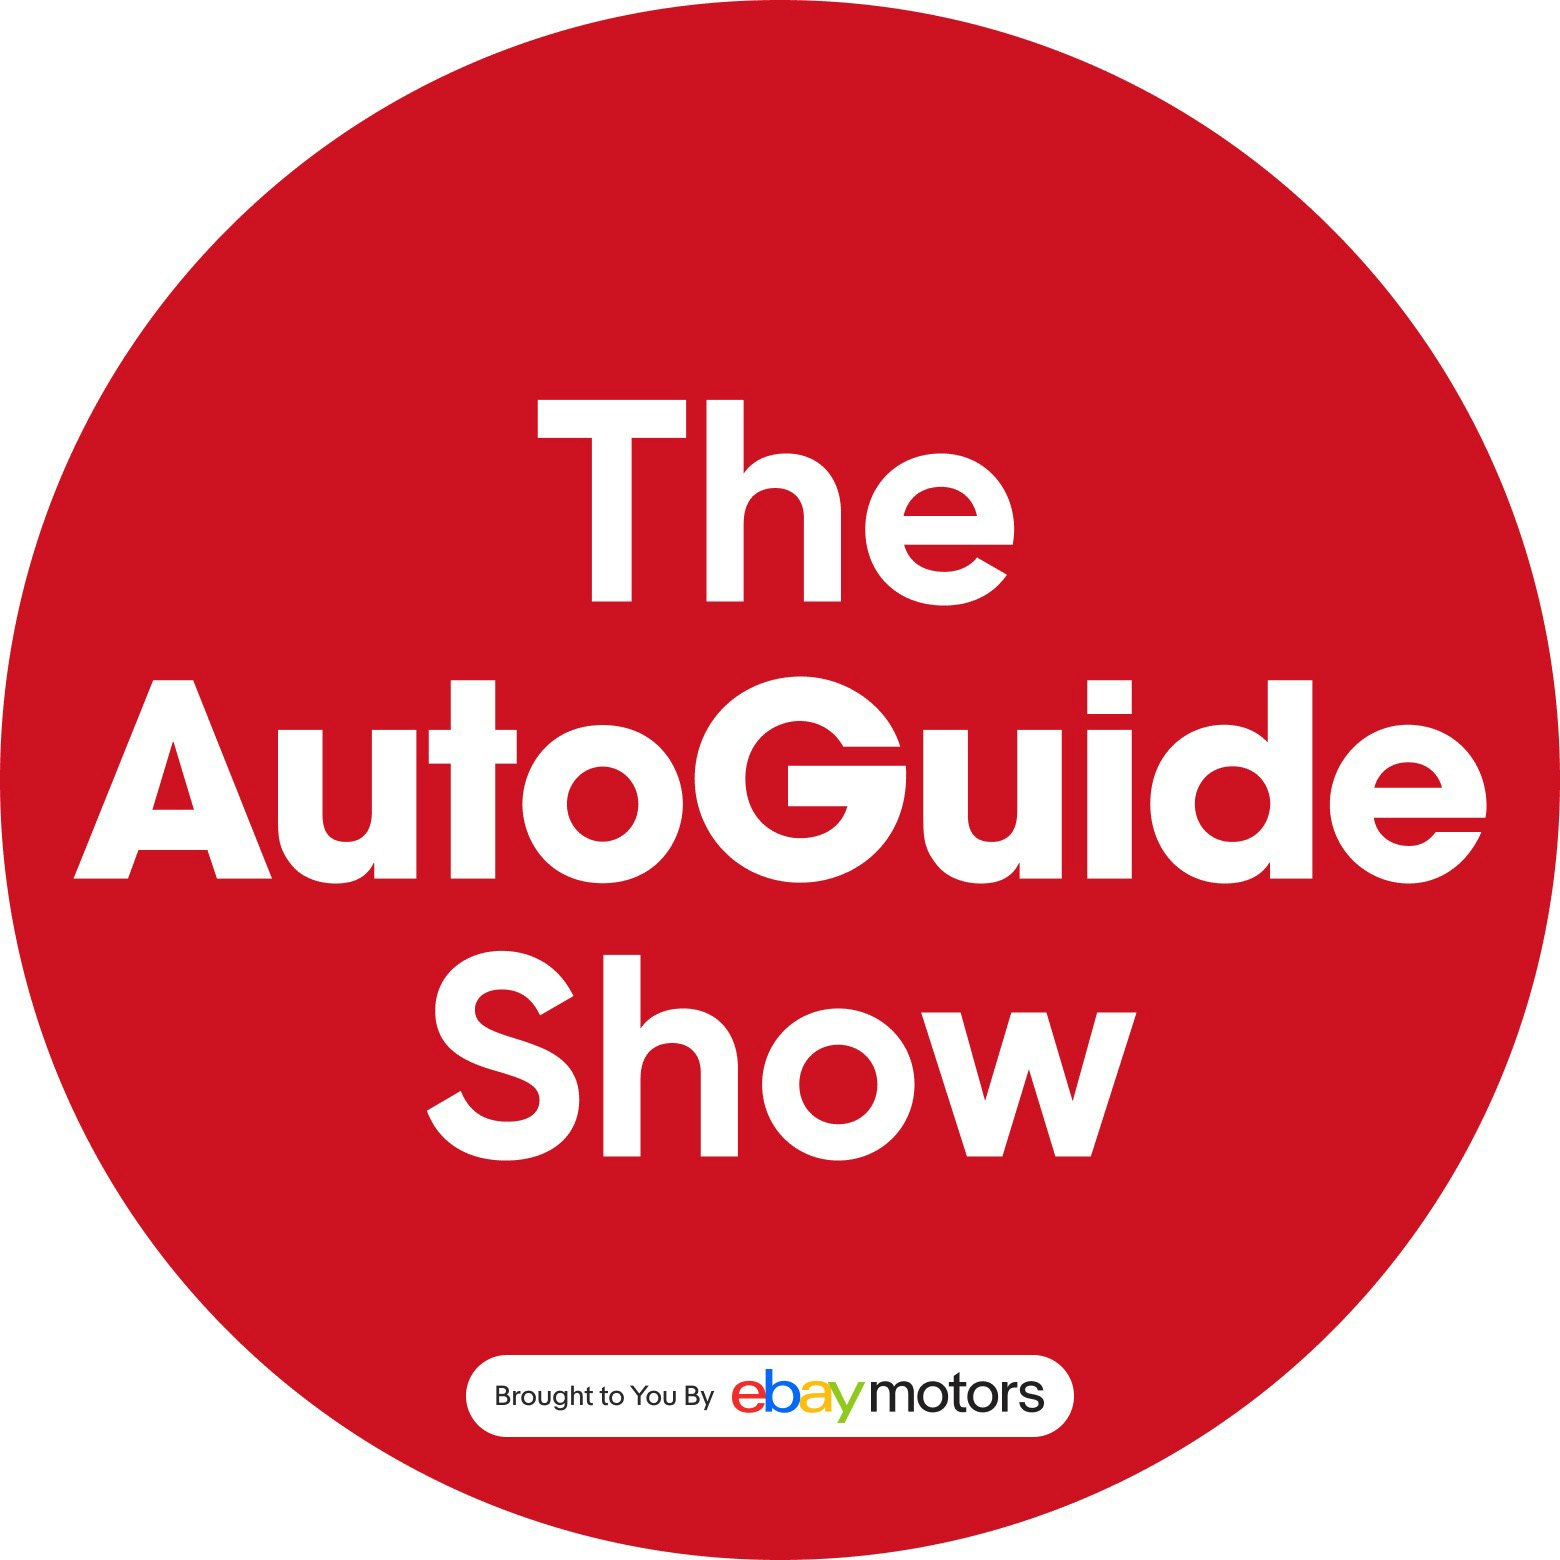 The AutoGuide Show